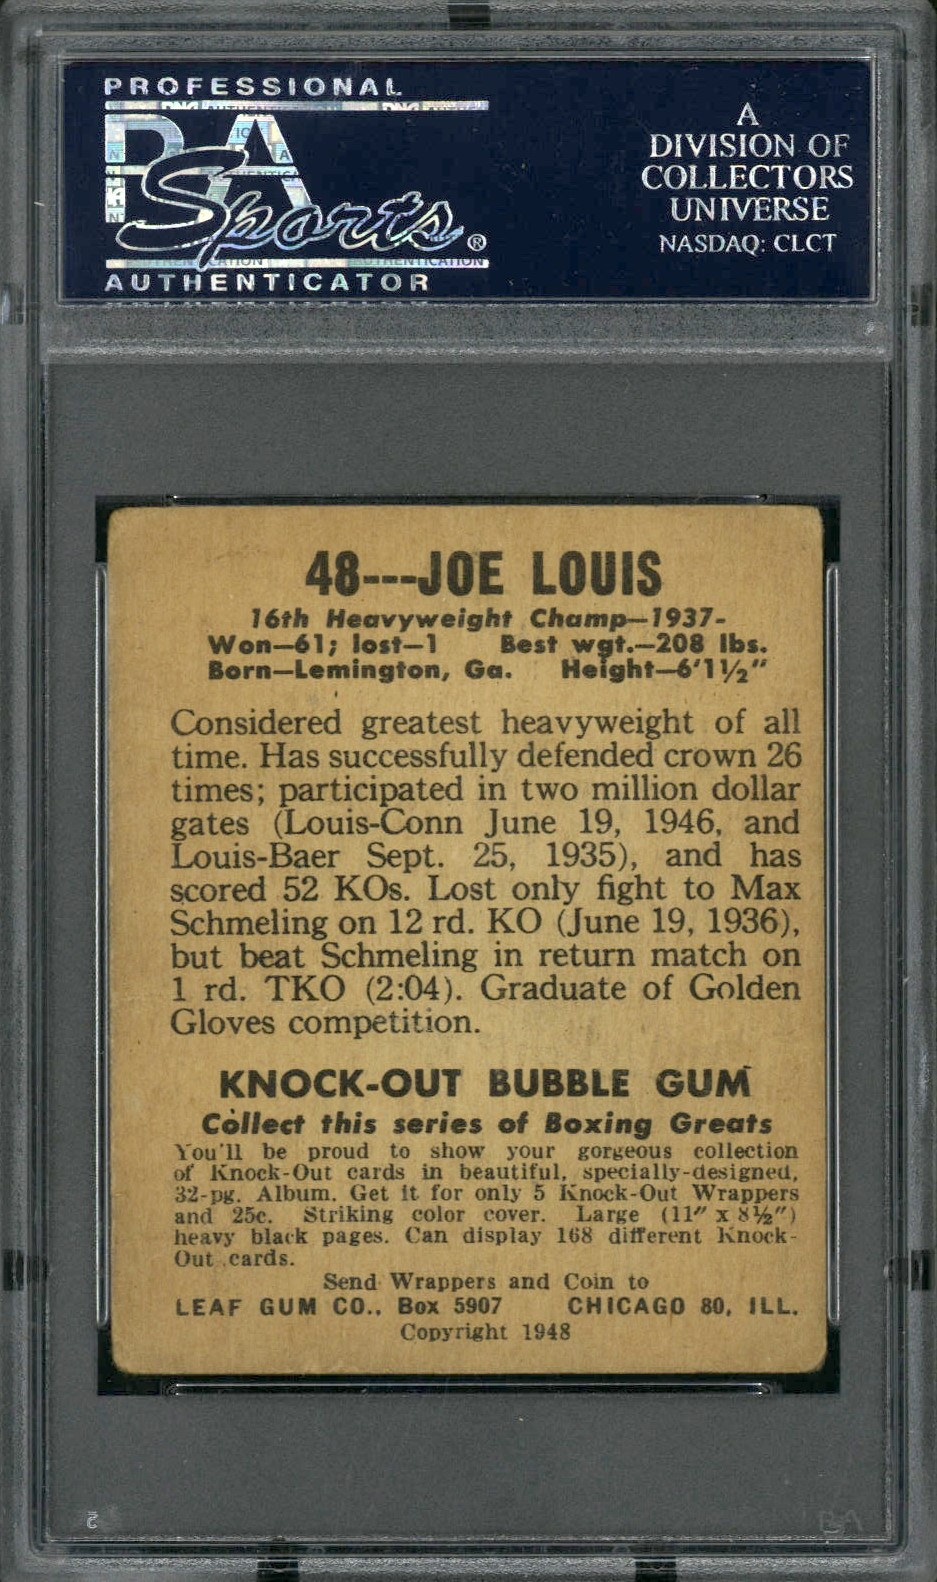 1951 Topps Ringside #88 Joe Louis